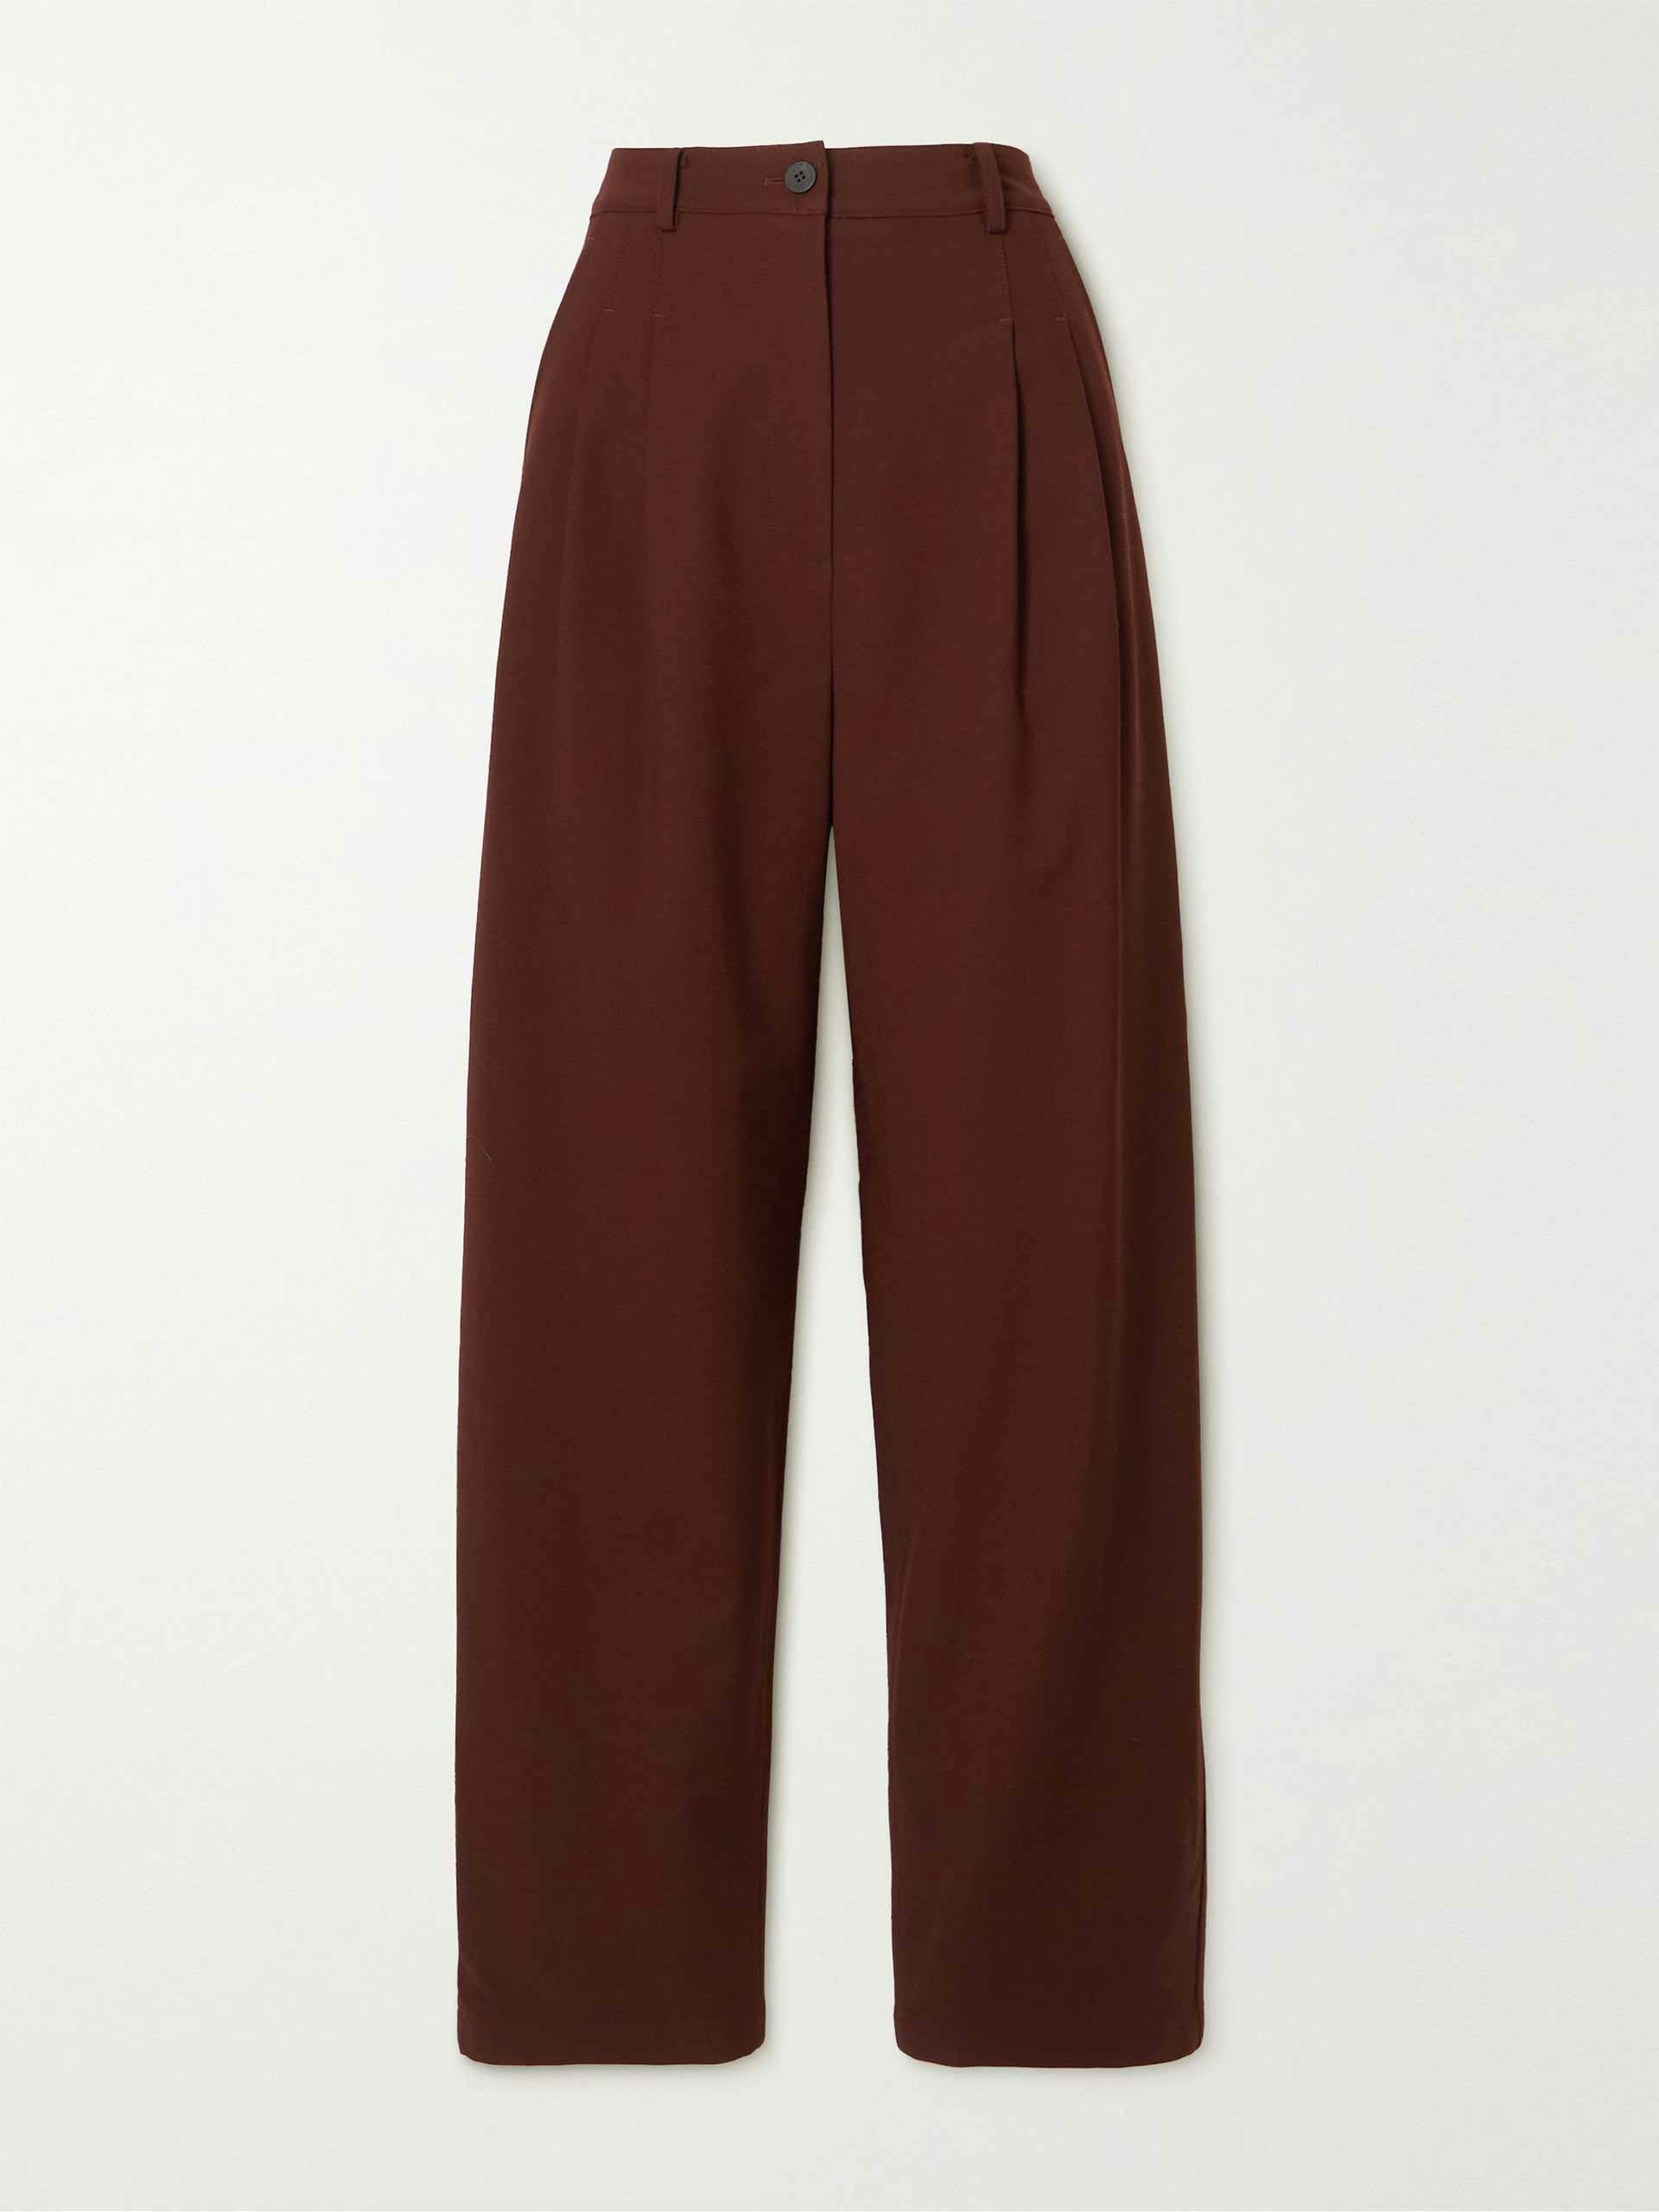 Burgundy pleated wide-leg trousers